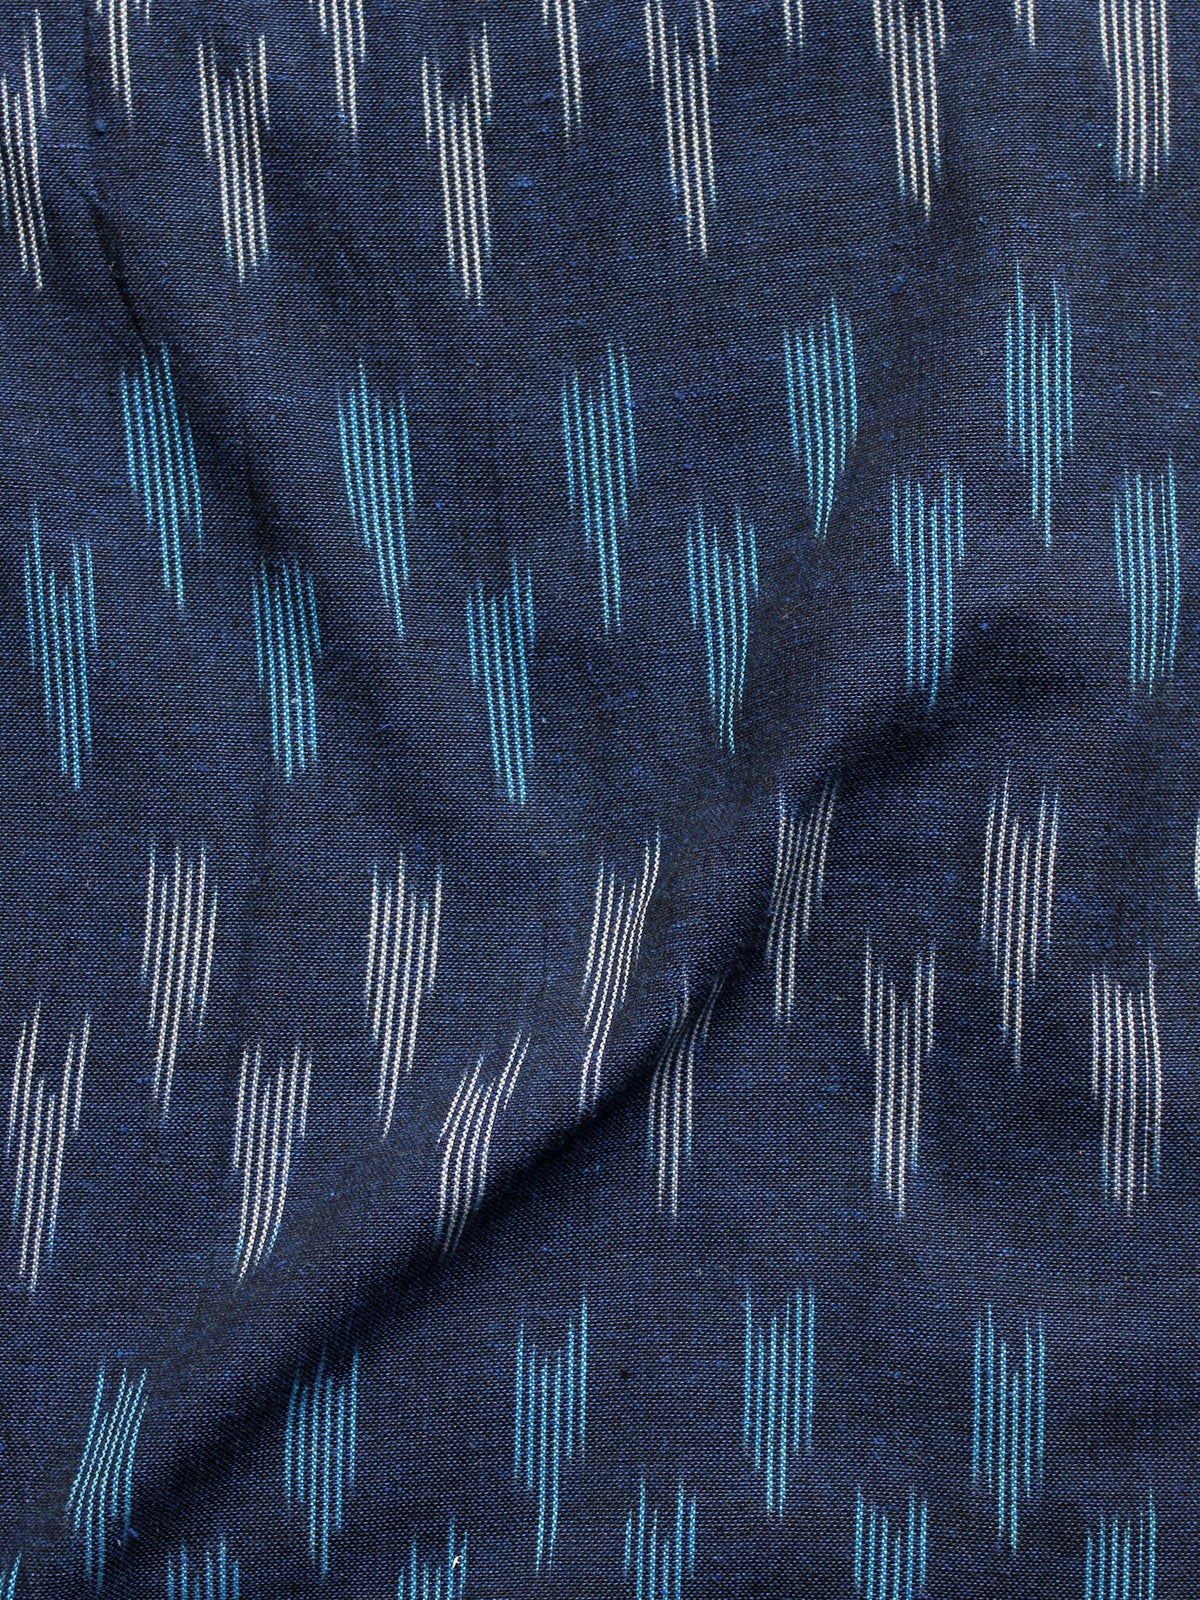 Blue Ivory Pochampally Hand Woven Ikat Fabric Per Meter - F002F944